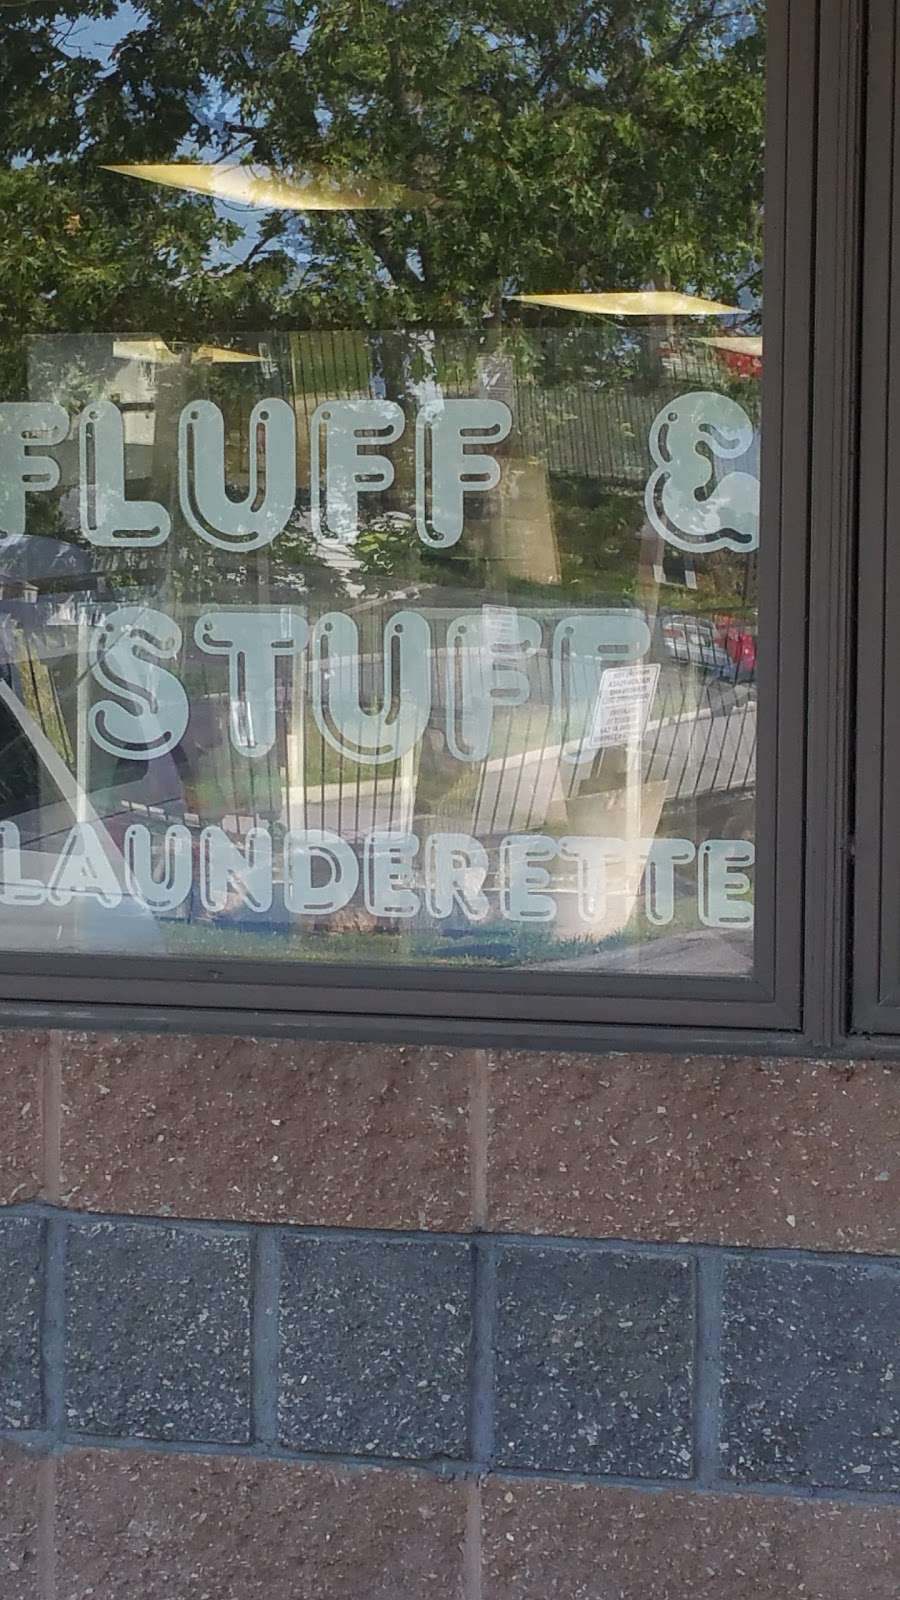 Fluff & Stuff Launderette | Linden St, Bethlehem, PA 18017